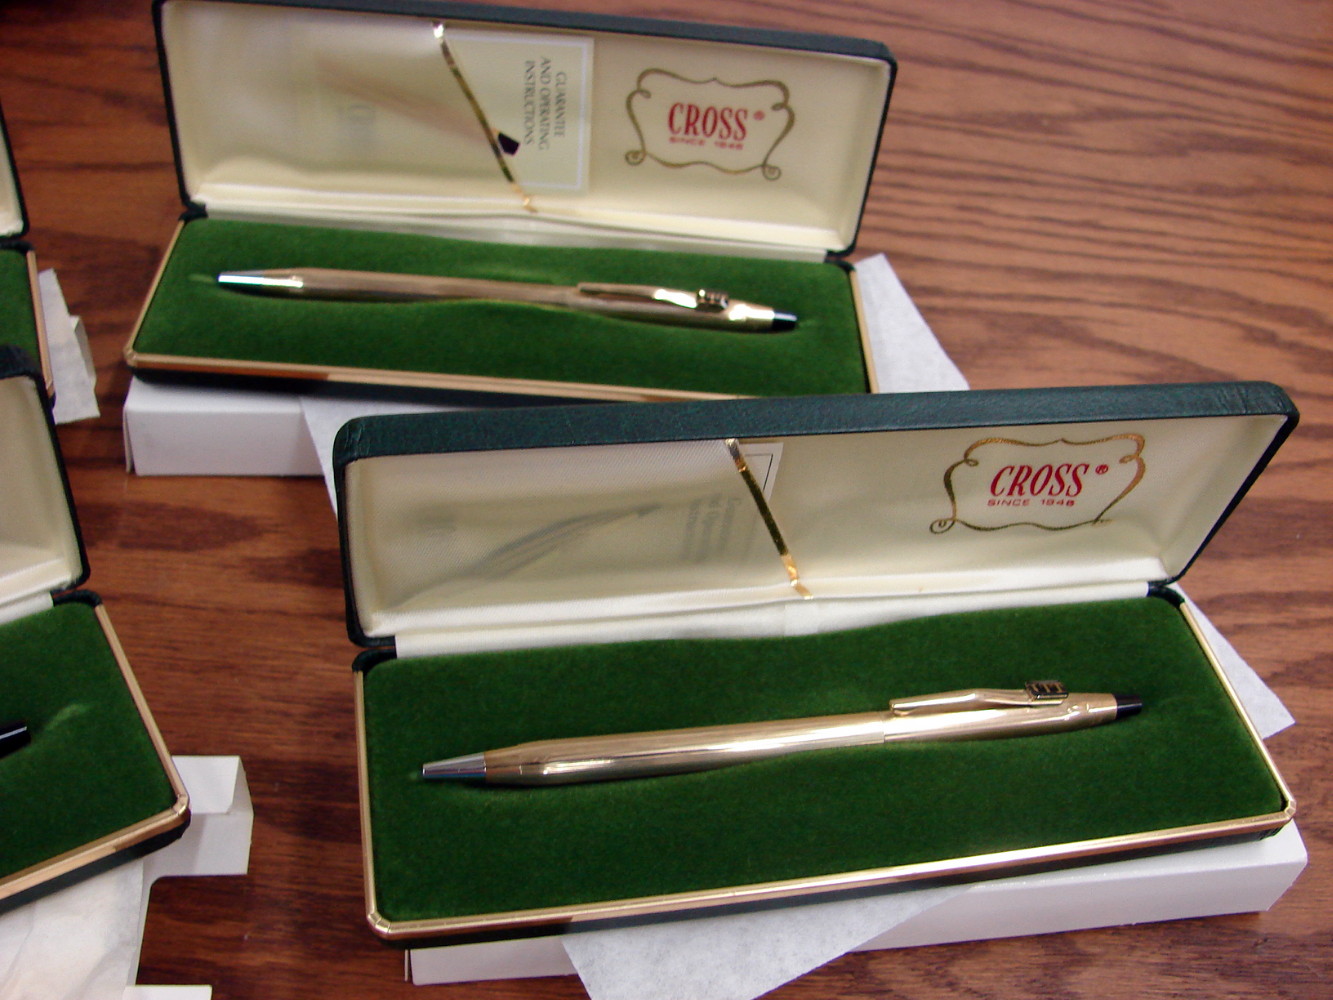 Vintage NOS Swiss Scribe Pen and Pencil Set in Original Box.